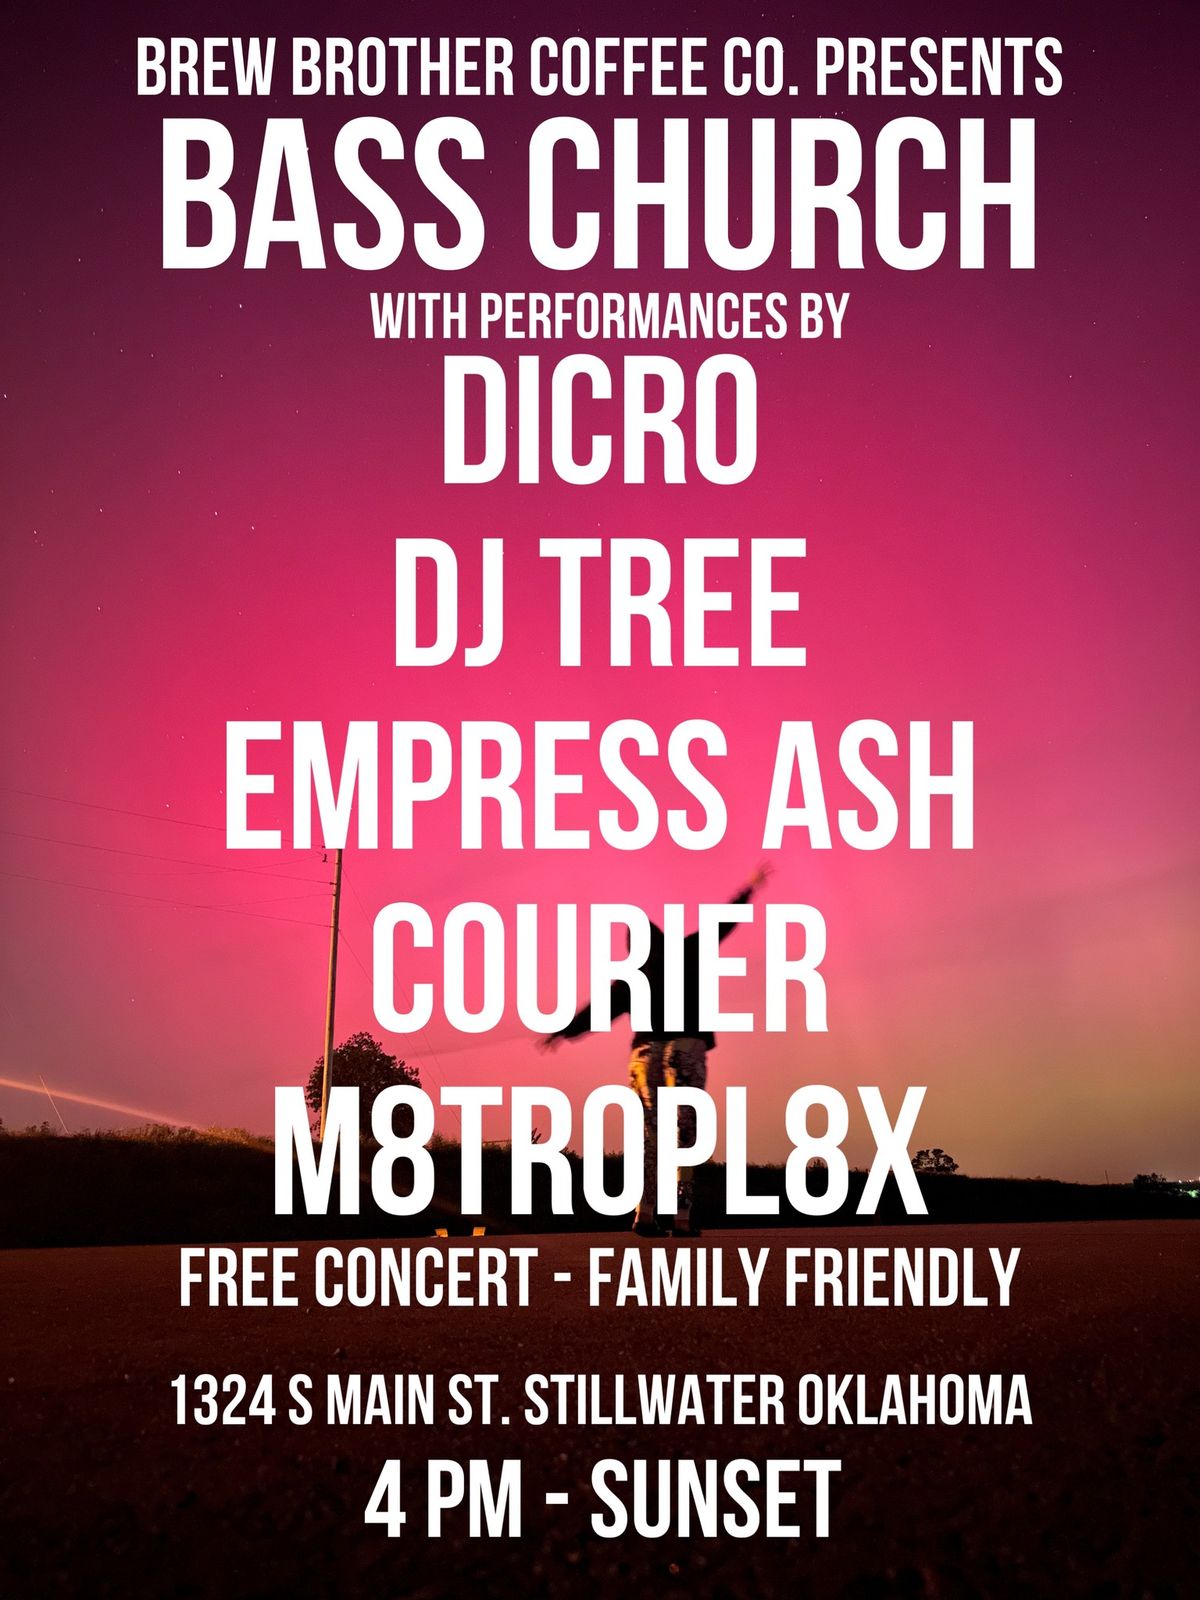 Bass Church round 2 - 05\/26 - Dj Tree, Empress Ash, Dicro, Courier, and M8tr0pl8x 